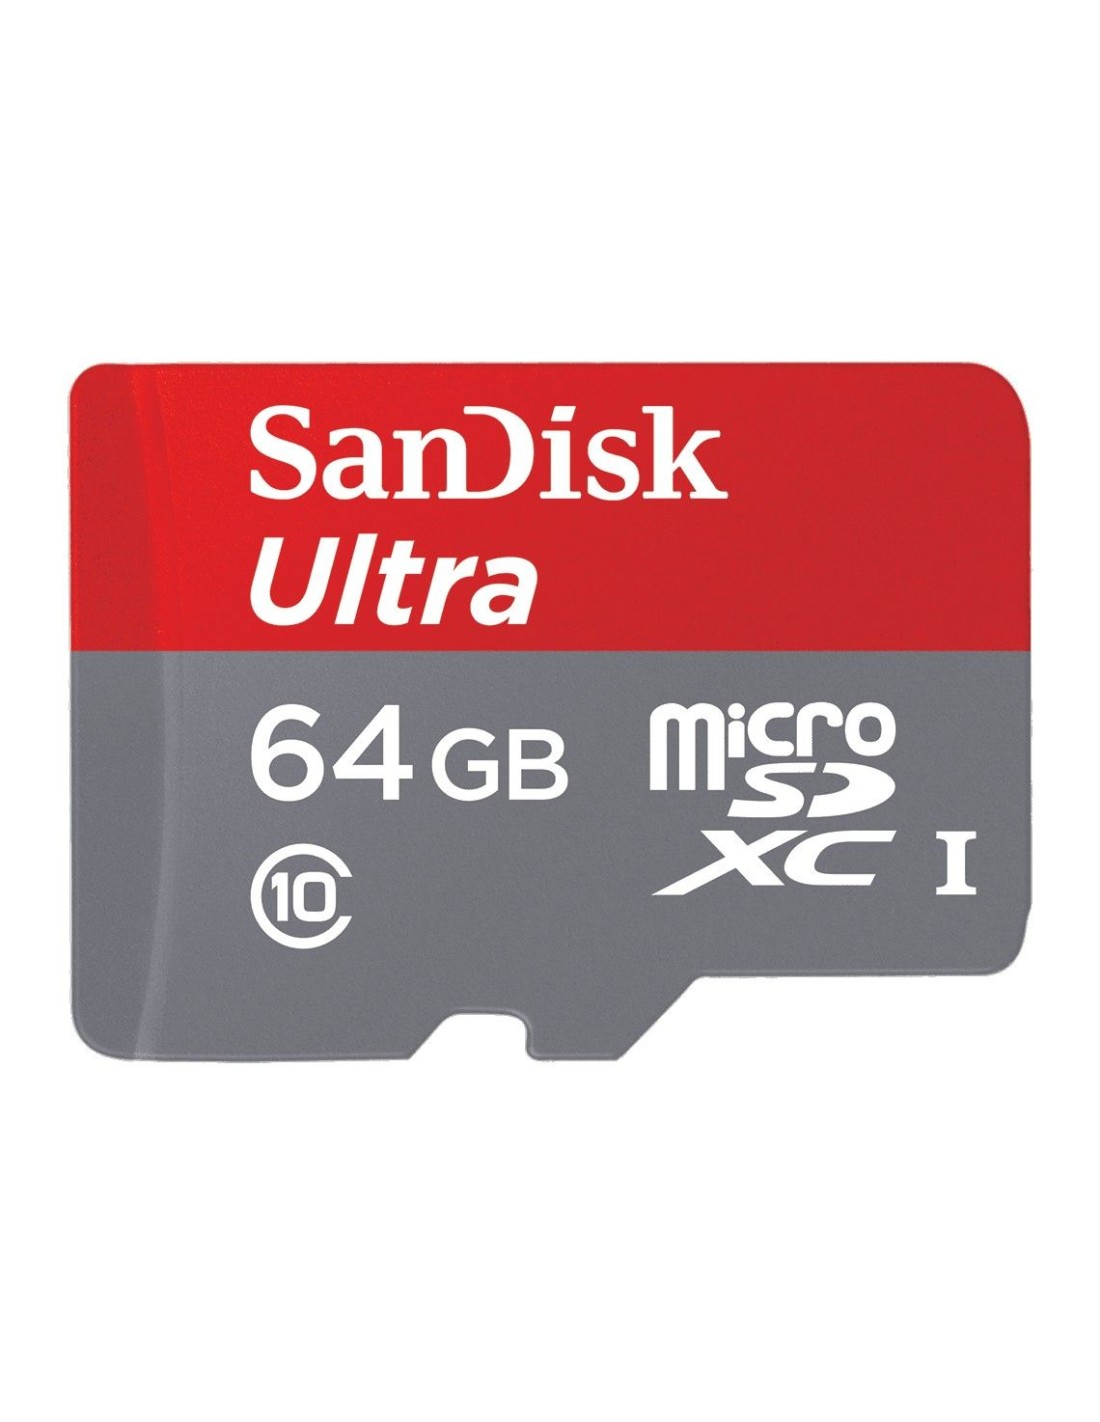 SanDisk Ultra, microSD, 64GB memoria flash MicroSDXC Clase 10